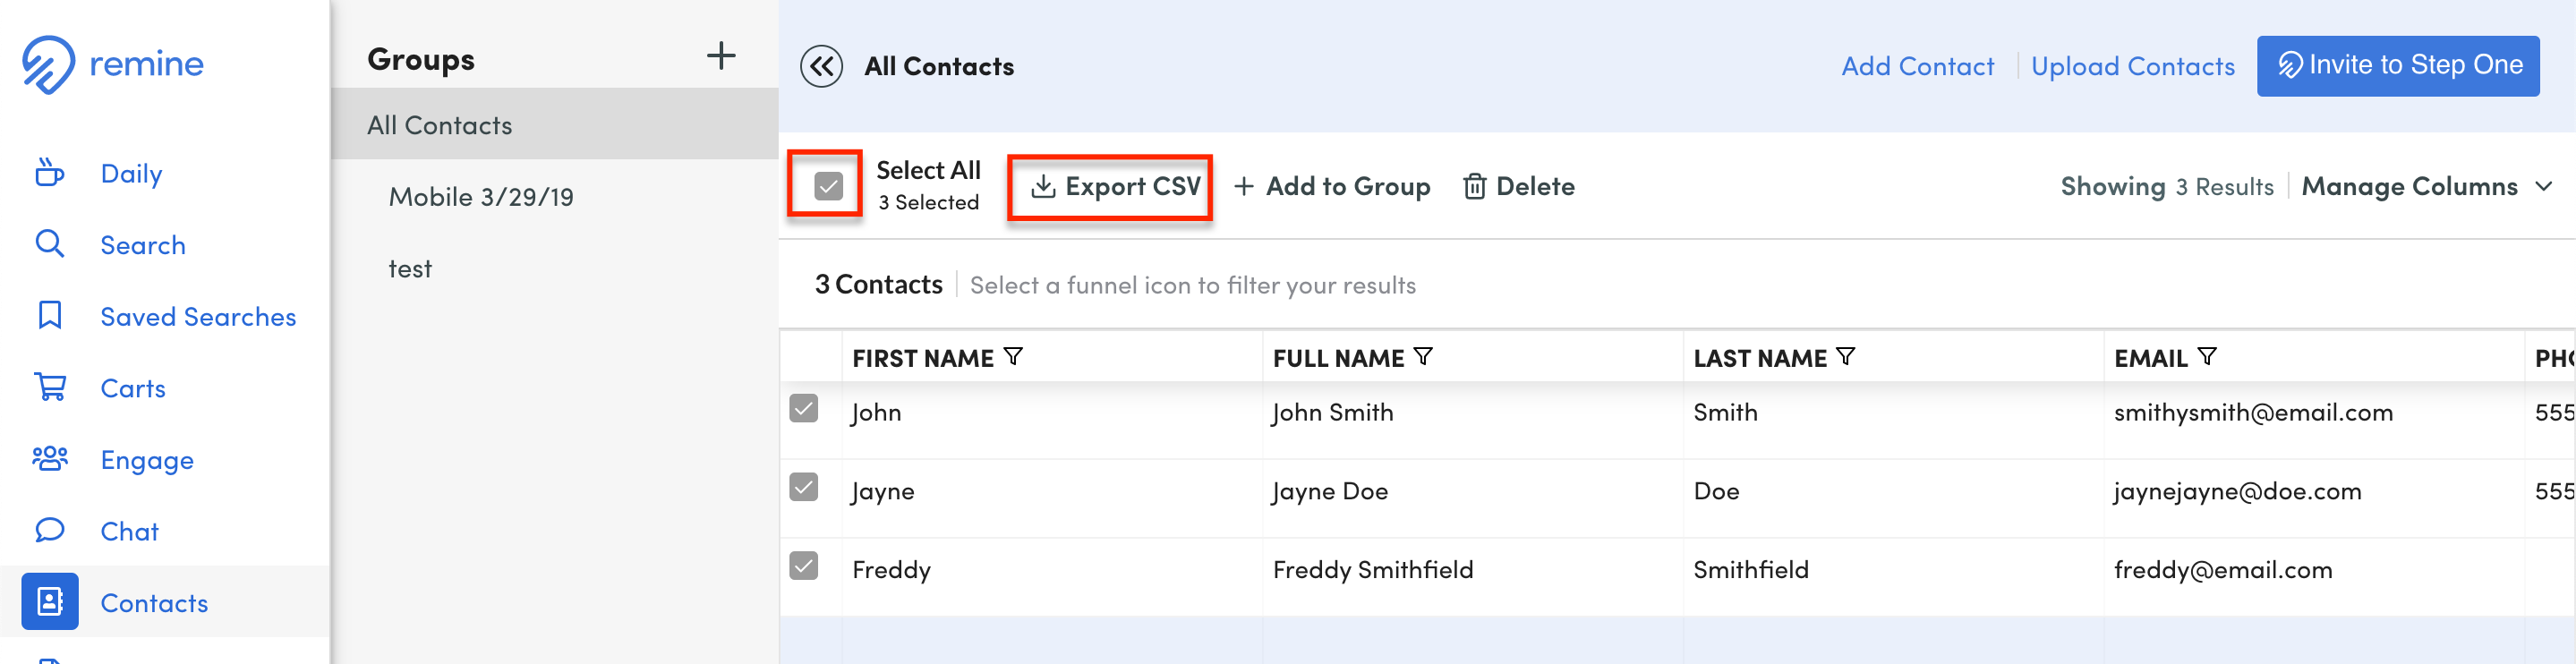 Export_Contacts.png